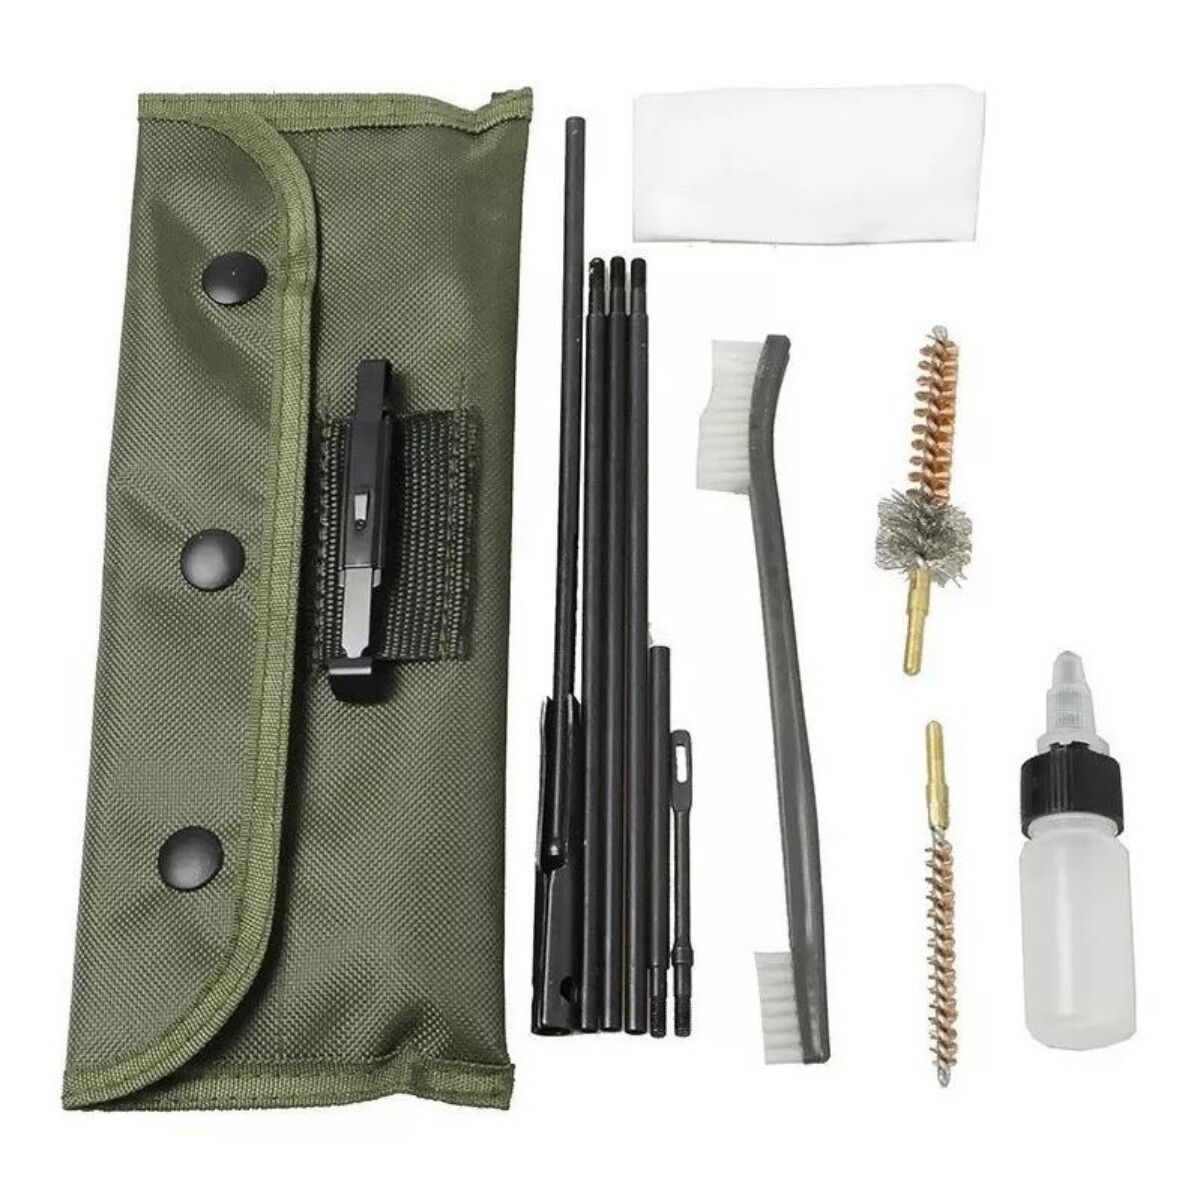 Kit de limpieza para pistola o rifle - 11 piezas 